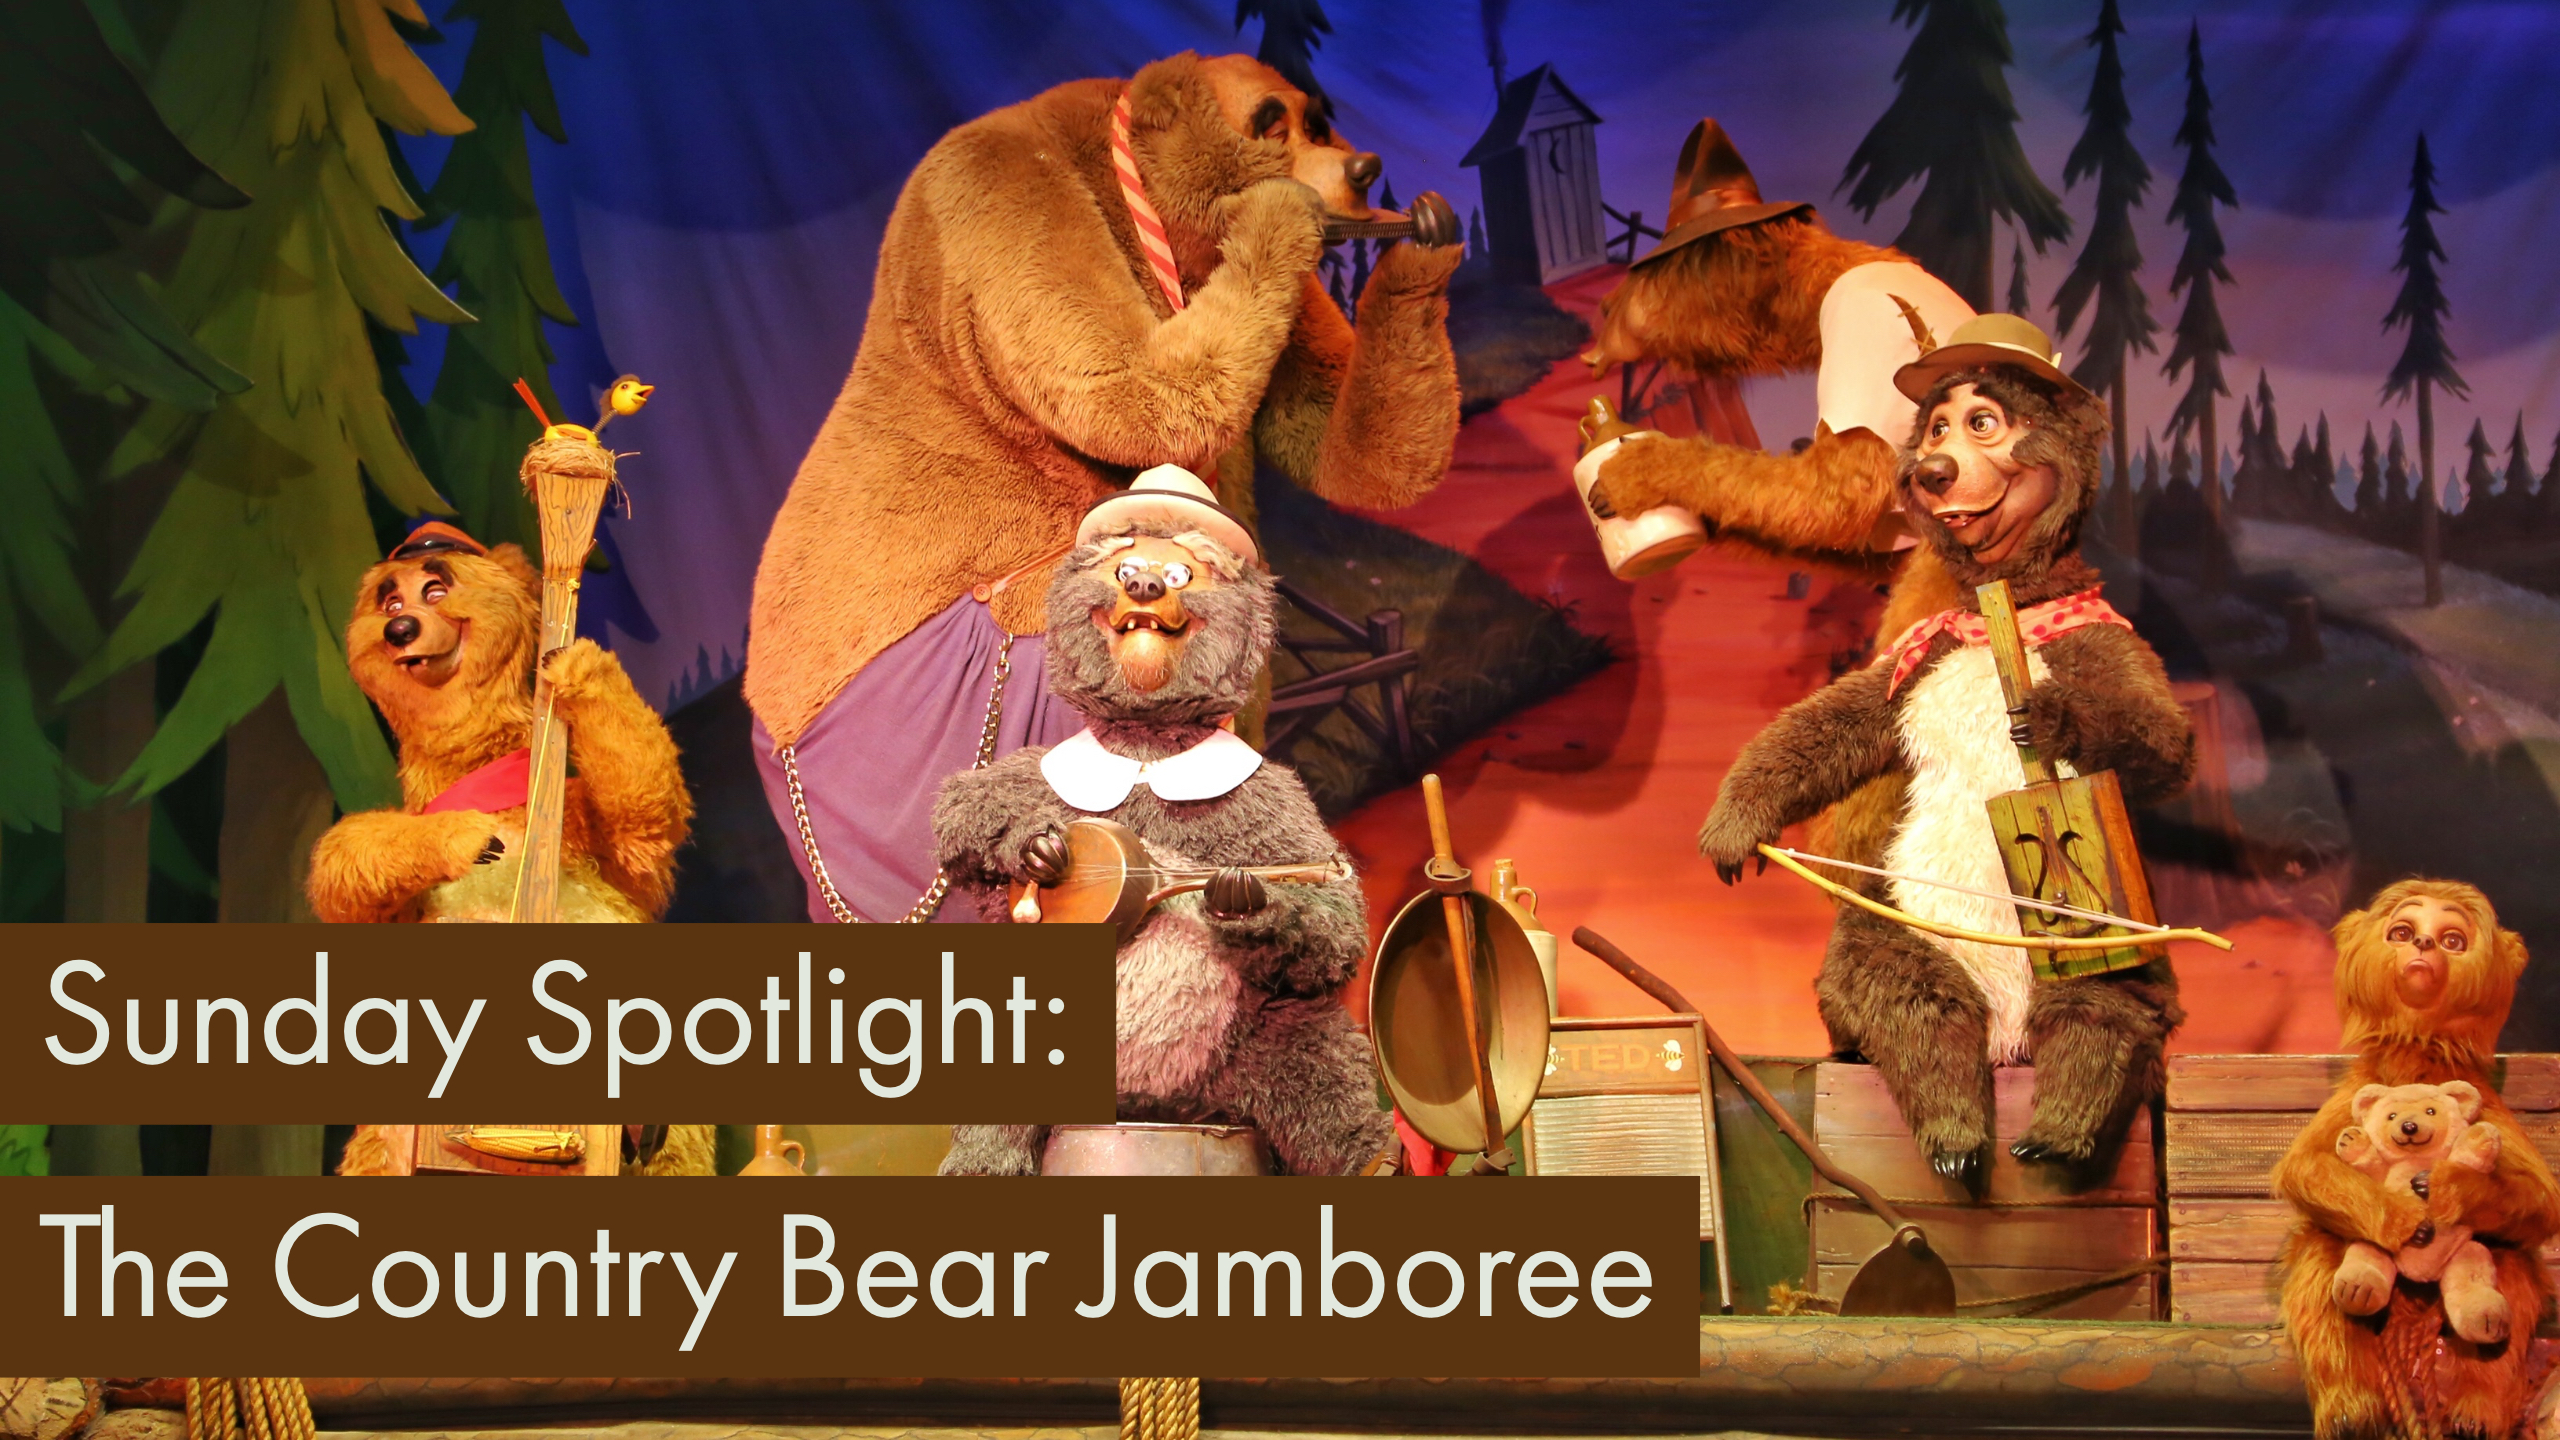 Sunday Spotlight: The Country Bear Jamboree